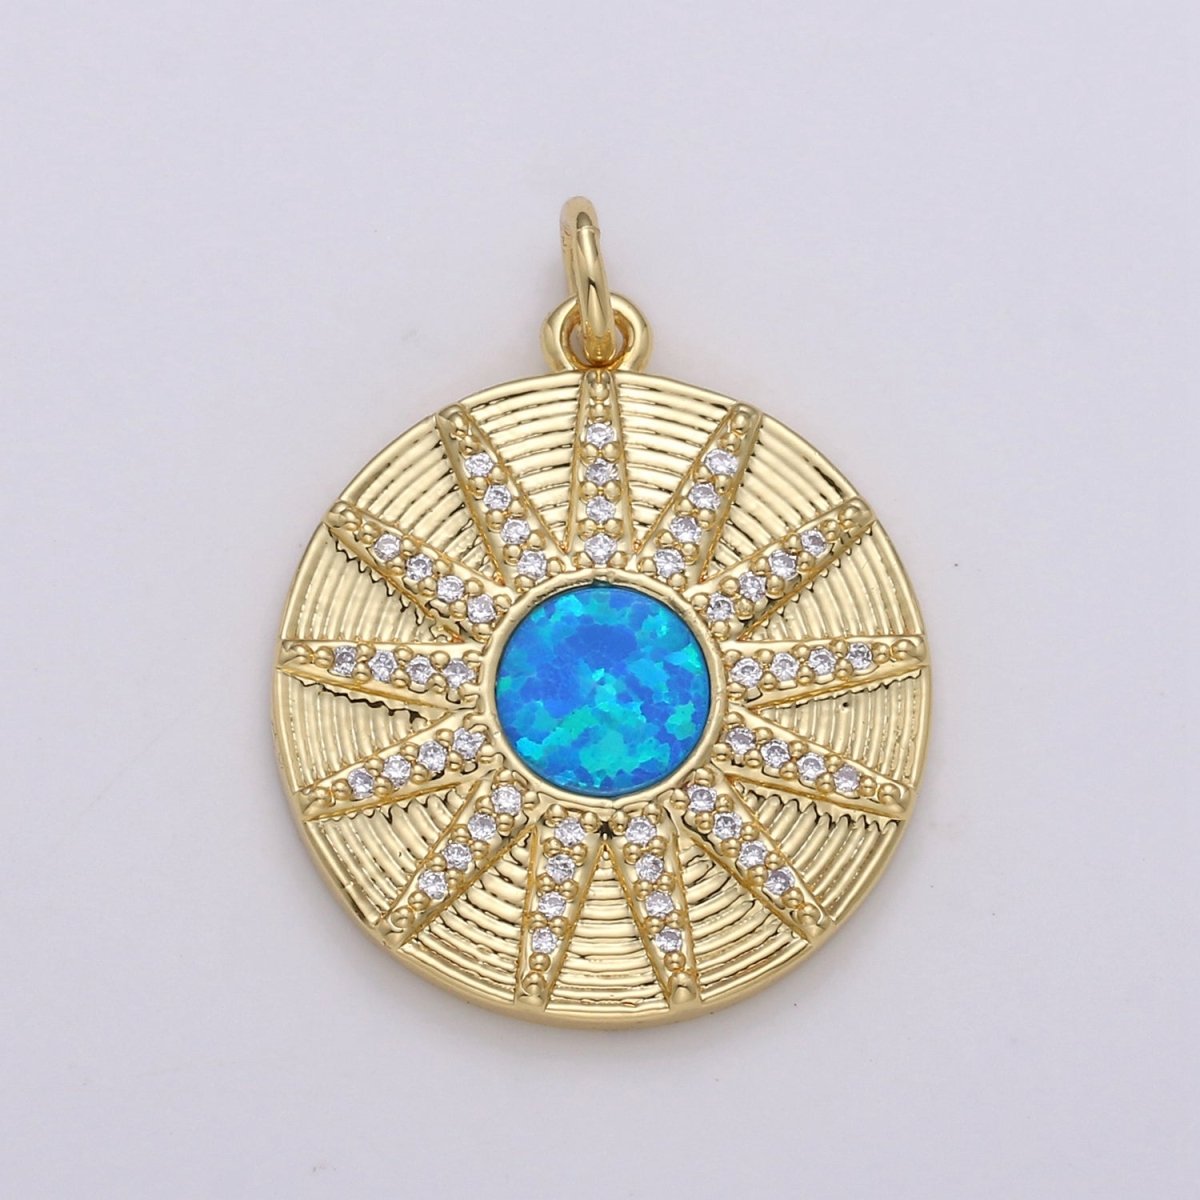 Dainty 14k Gold Filled Vergina Sun Charm Blue Opal Round SunBurst Medallion Pendant, 25x20mm, Micro Pave Gold Sun Celestial Jewelry D-472 - DLUXCA